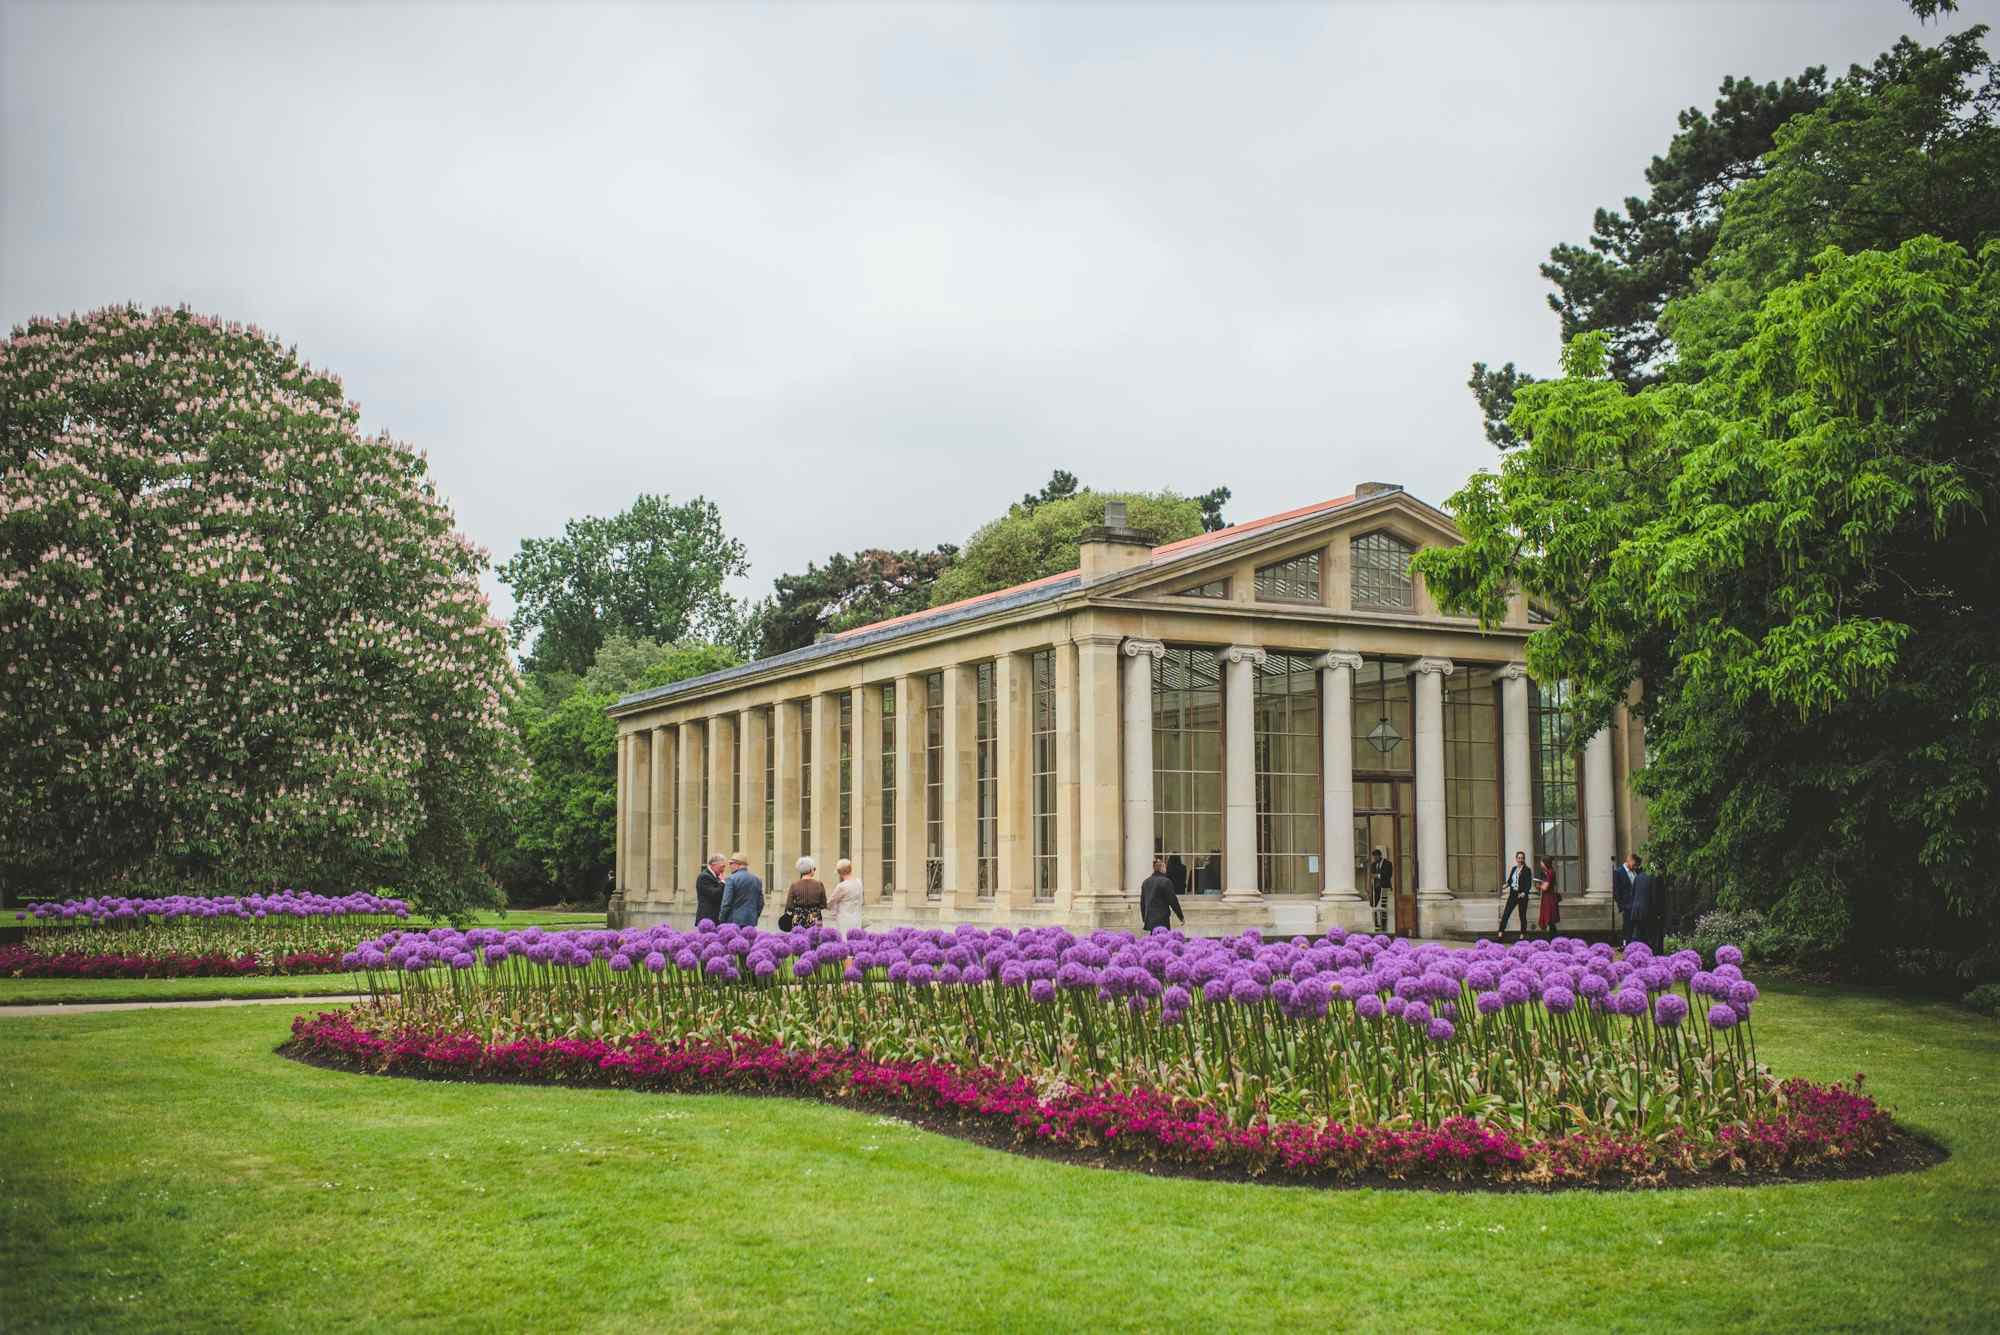 Nash Conservatory, Royal Botanic Gardens, Kew